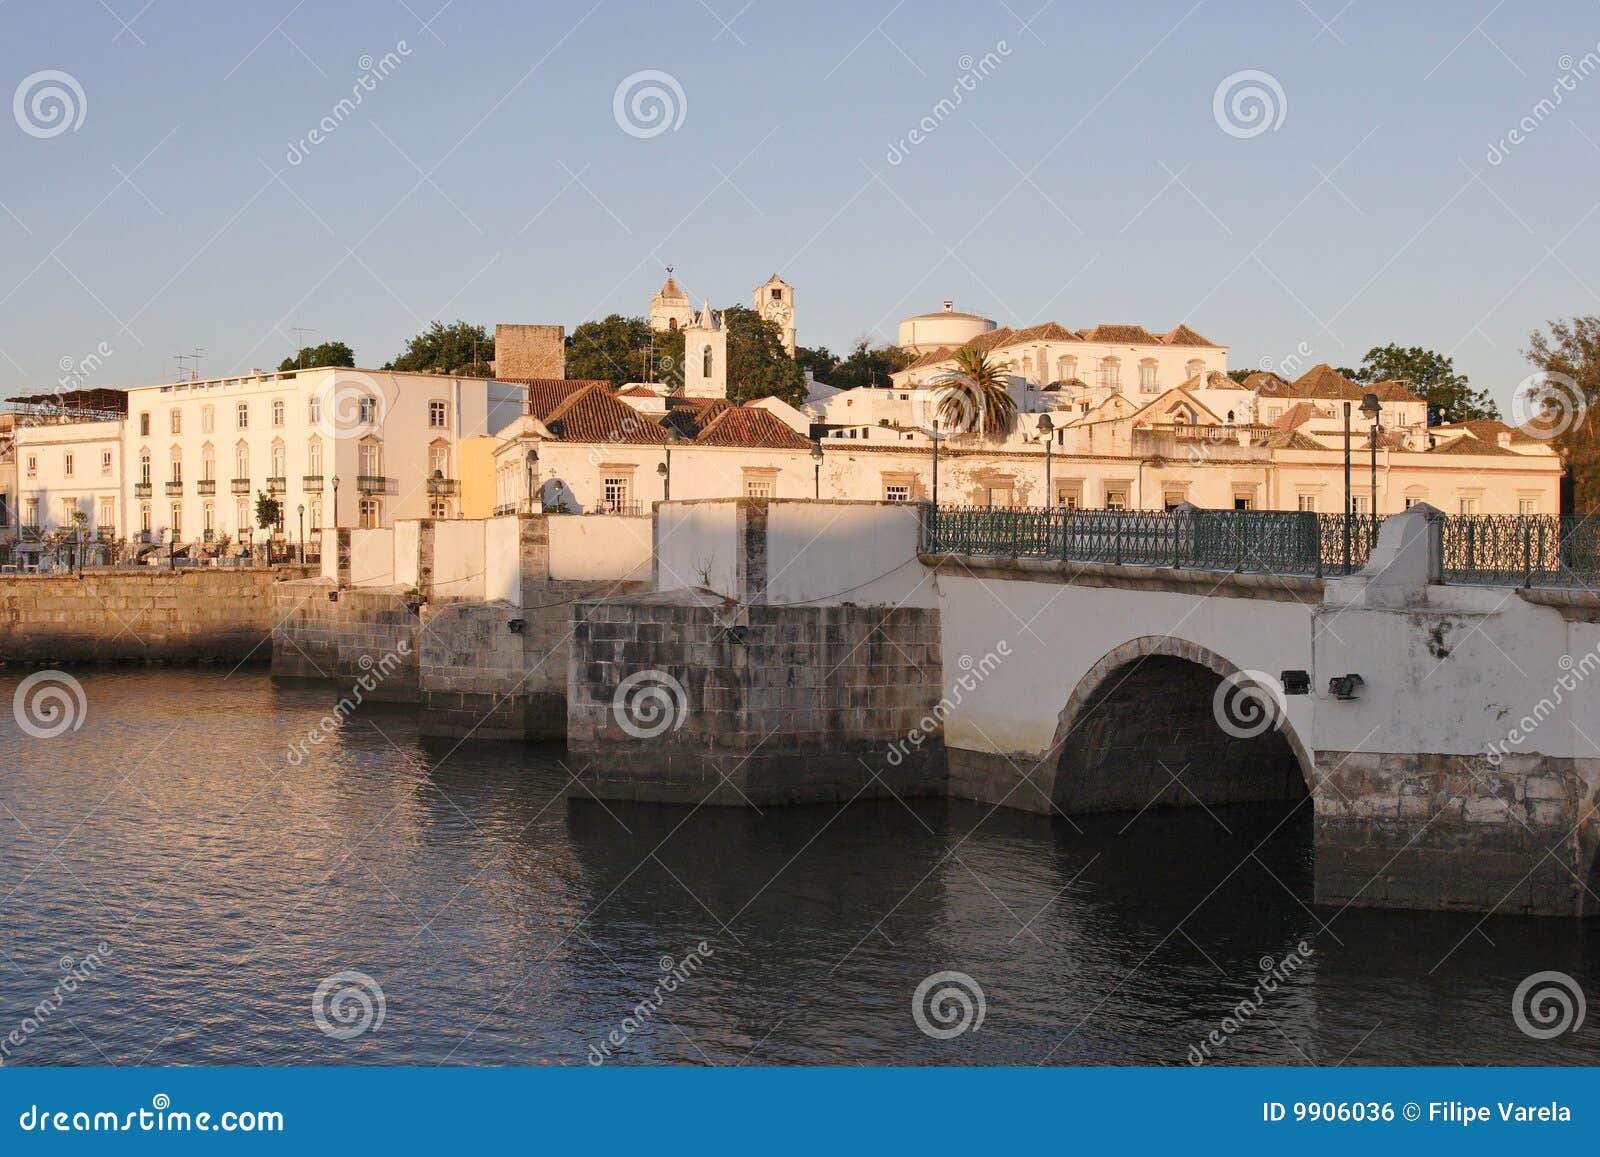 tavira, portugal, algarve - old roman bridge